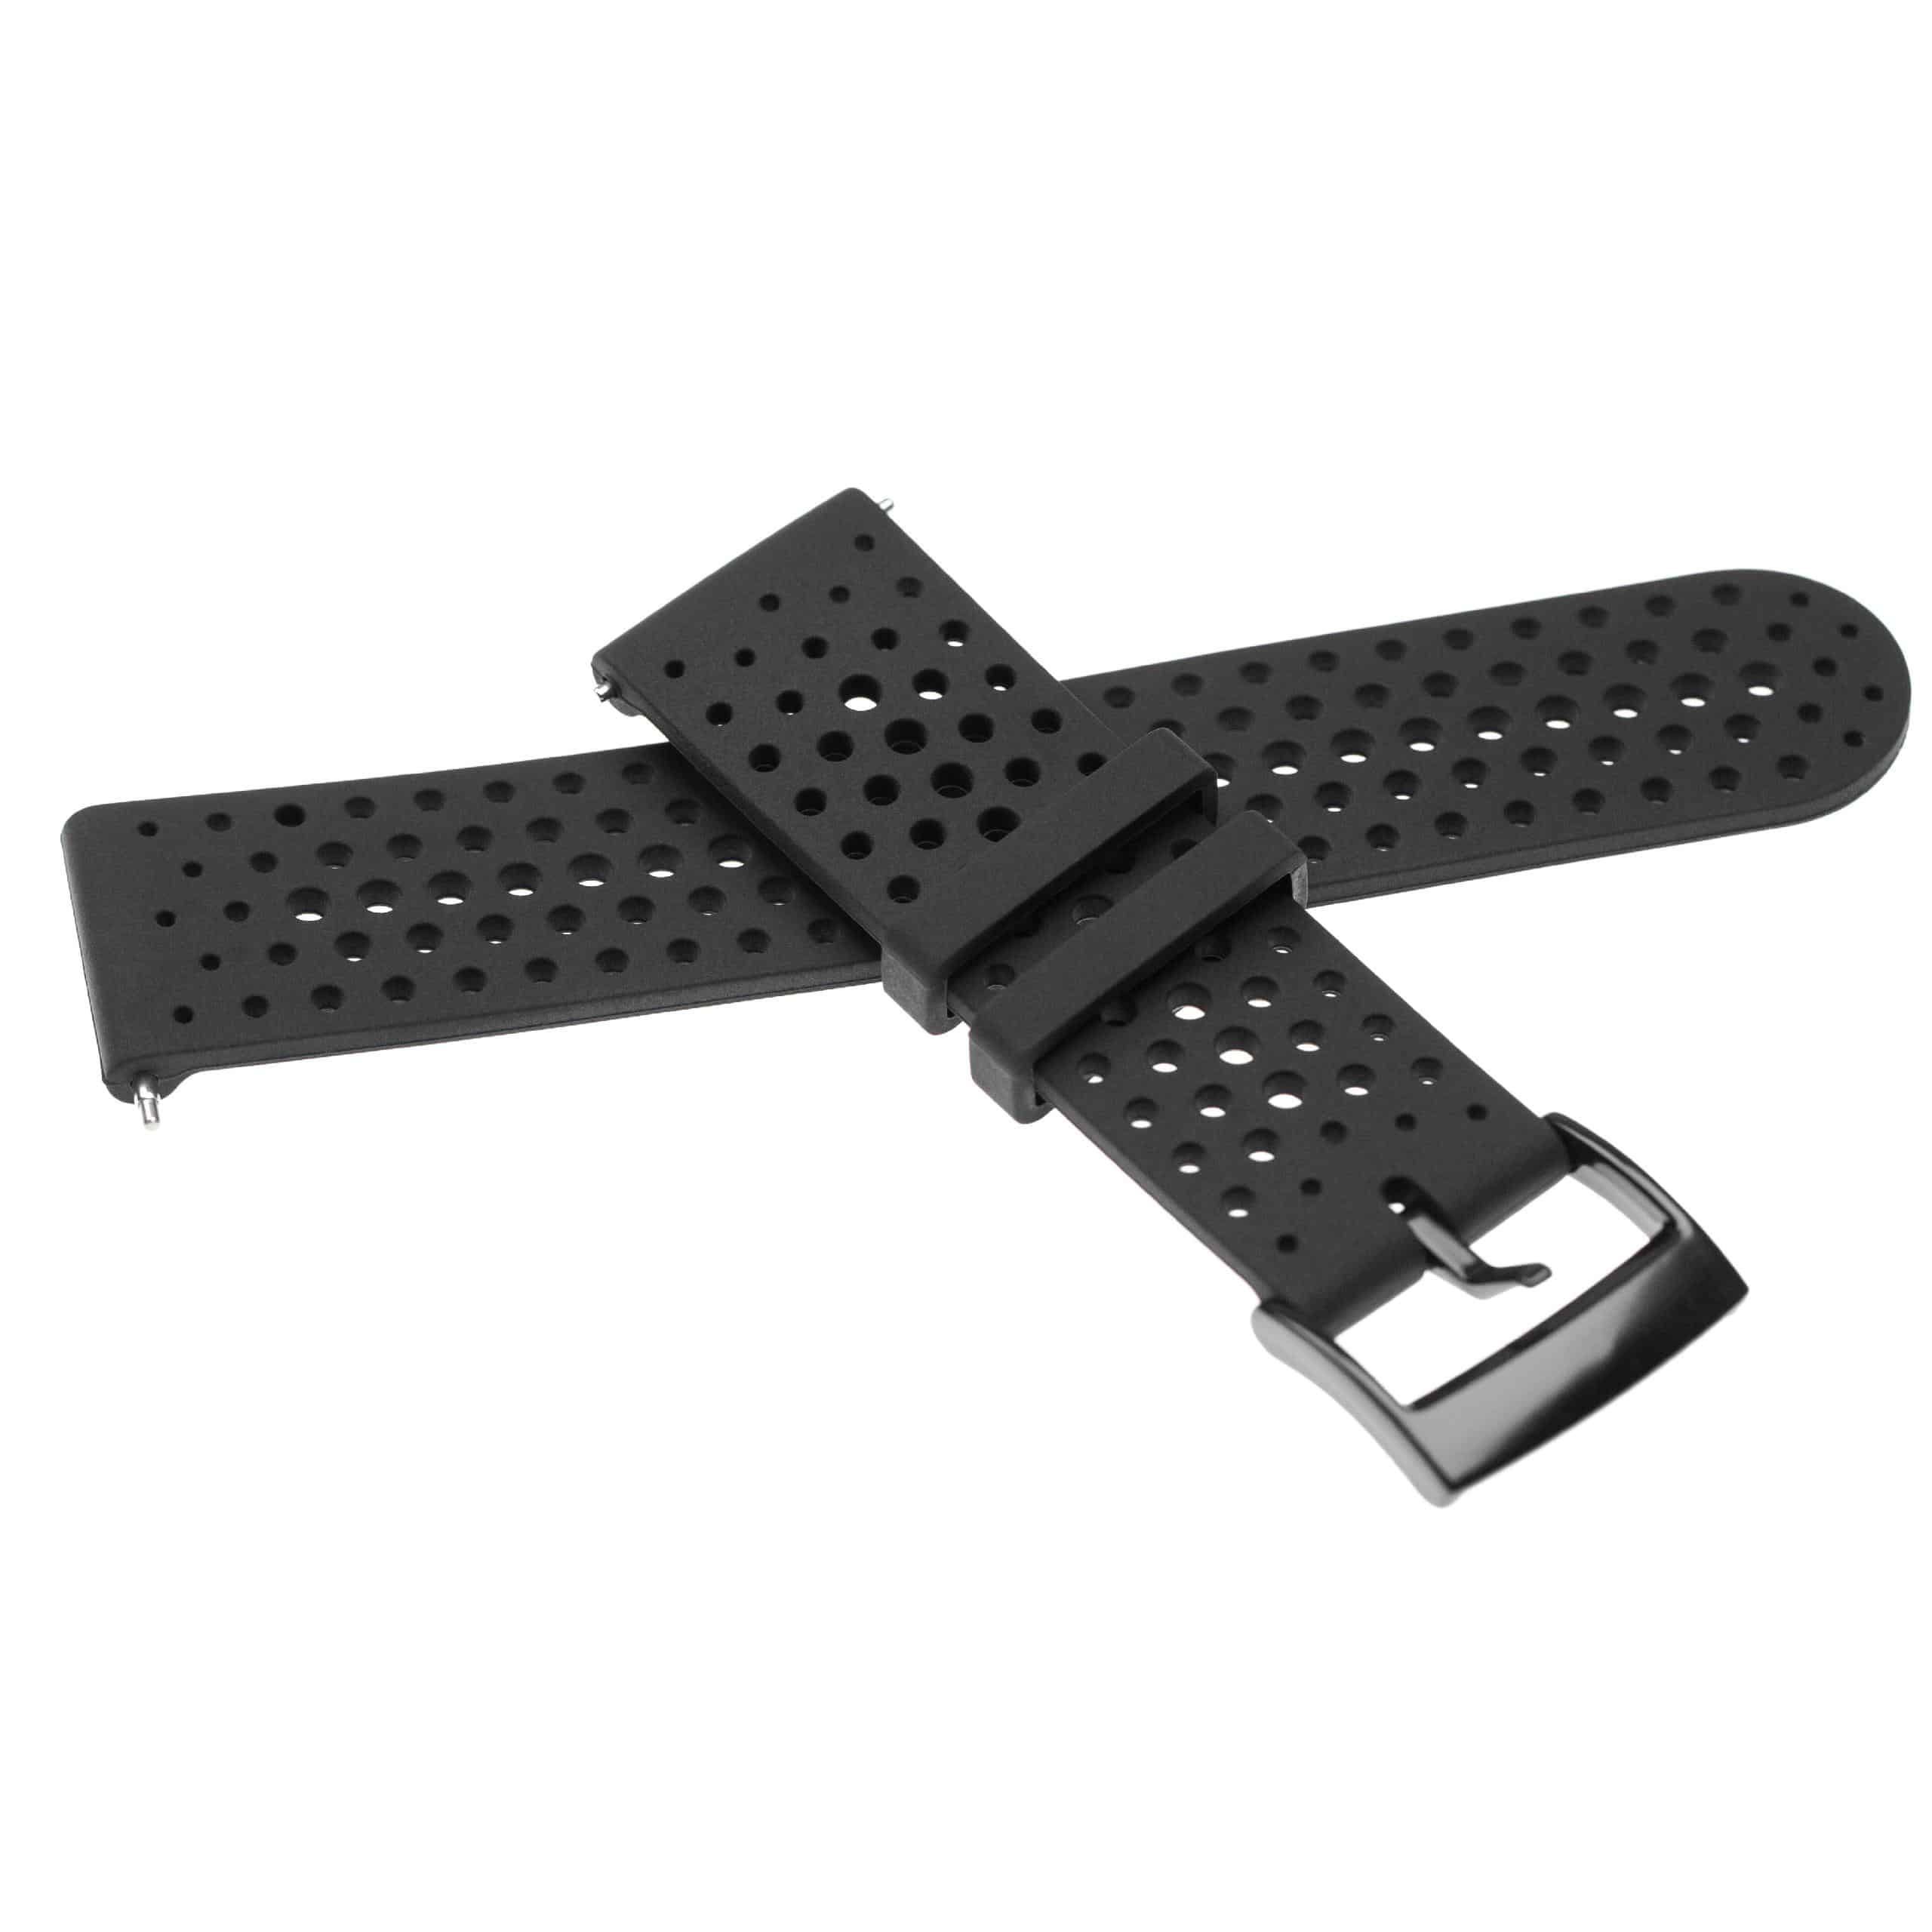 Armband für Suunto Smartwatch - 13,4 + 9,5 cm lang, 24mm breit, Silikon, schwarz